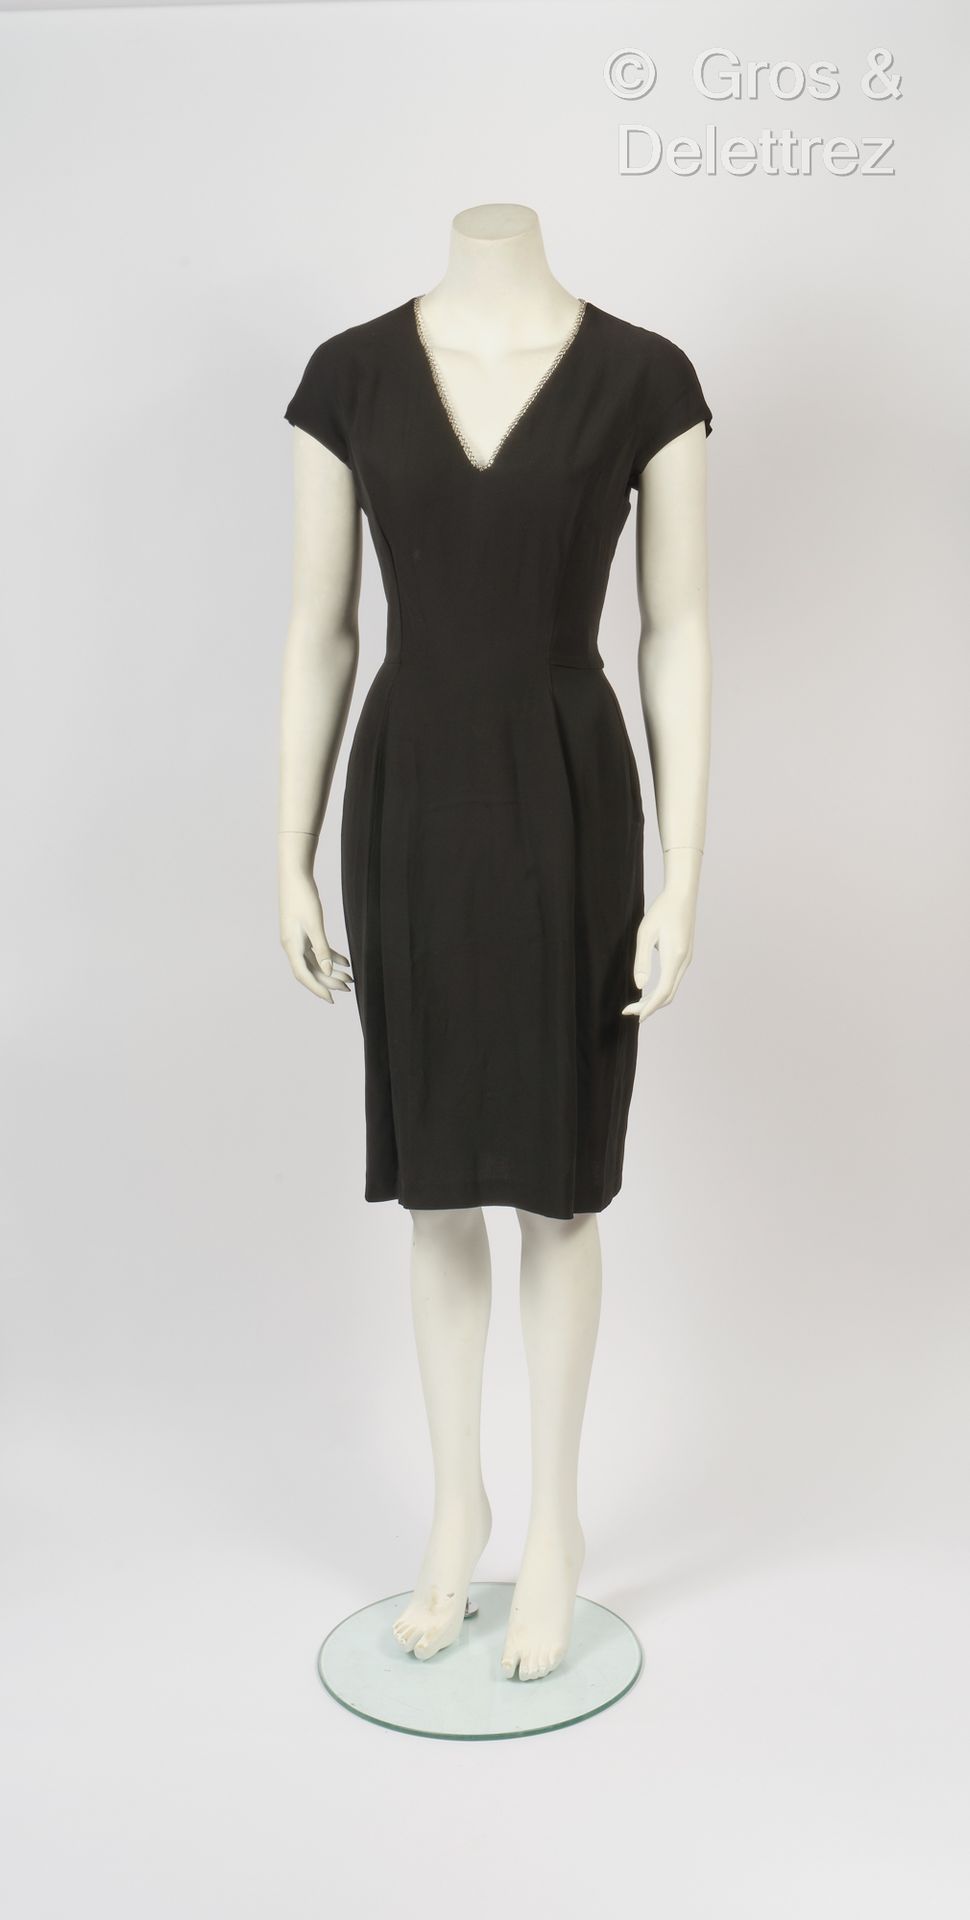 Yves SAINT LAURENT par Stefano Pilati Year 2009
Black crepe dress, V-neckline tr&hellip;